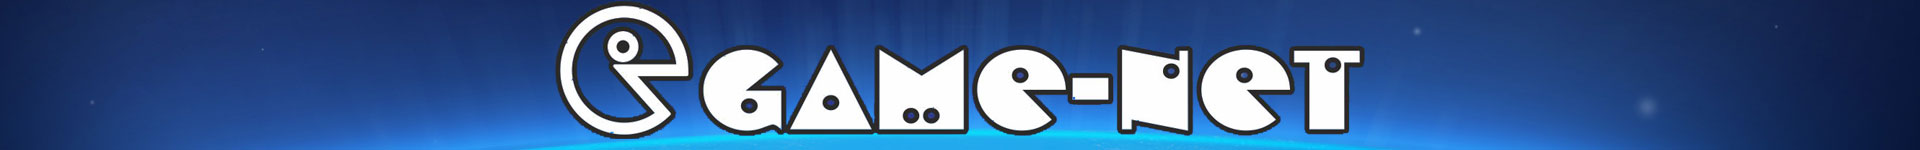 Gamenet Logos